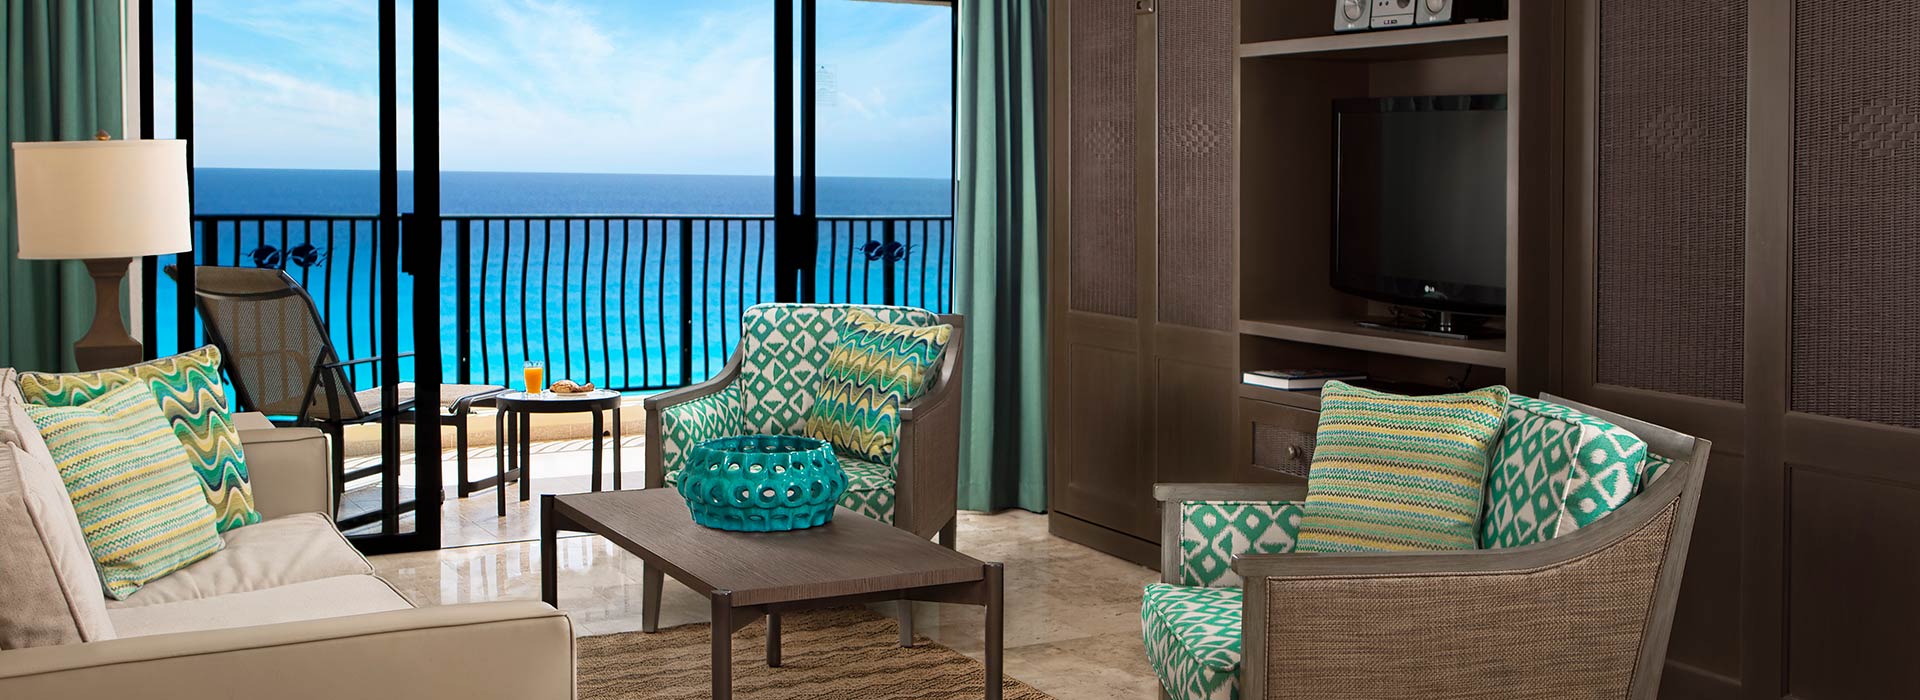 Beachfront villas one bedroom with private balcony in Cancun All Inclusive Resort